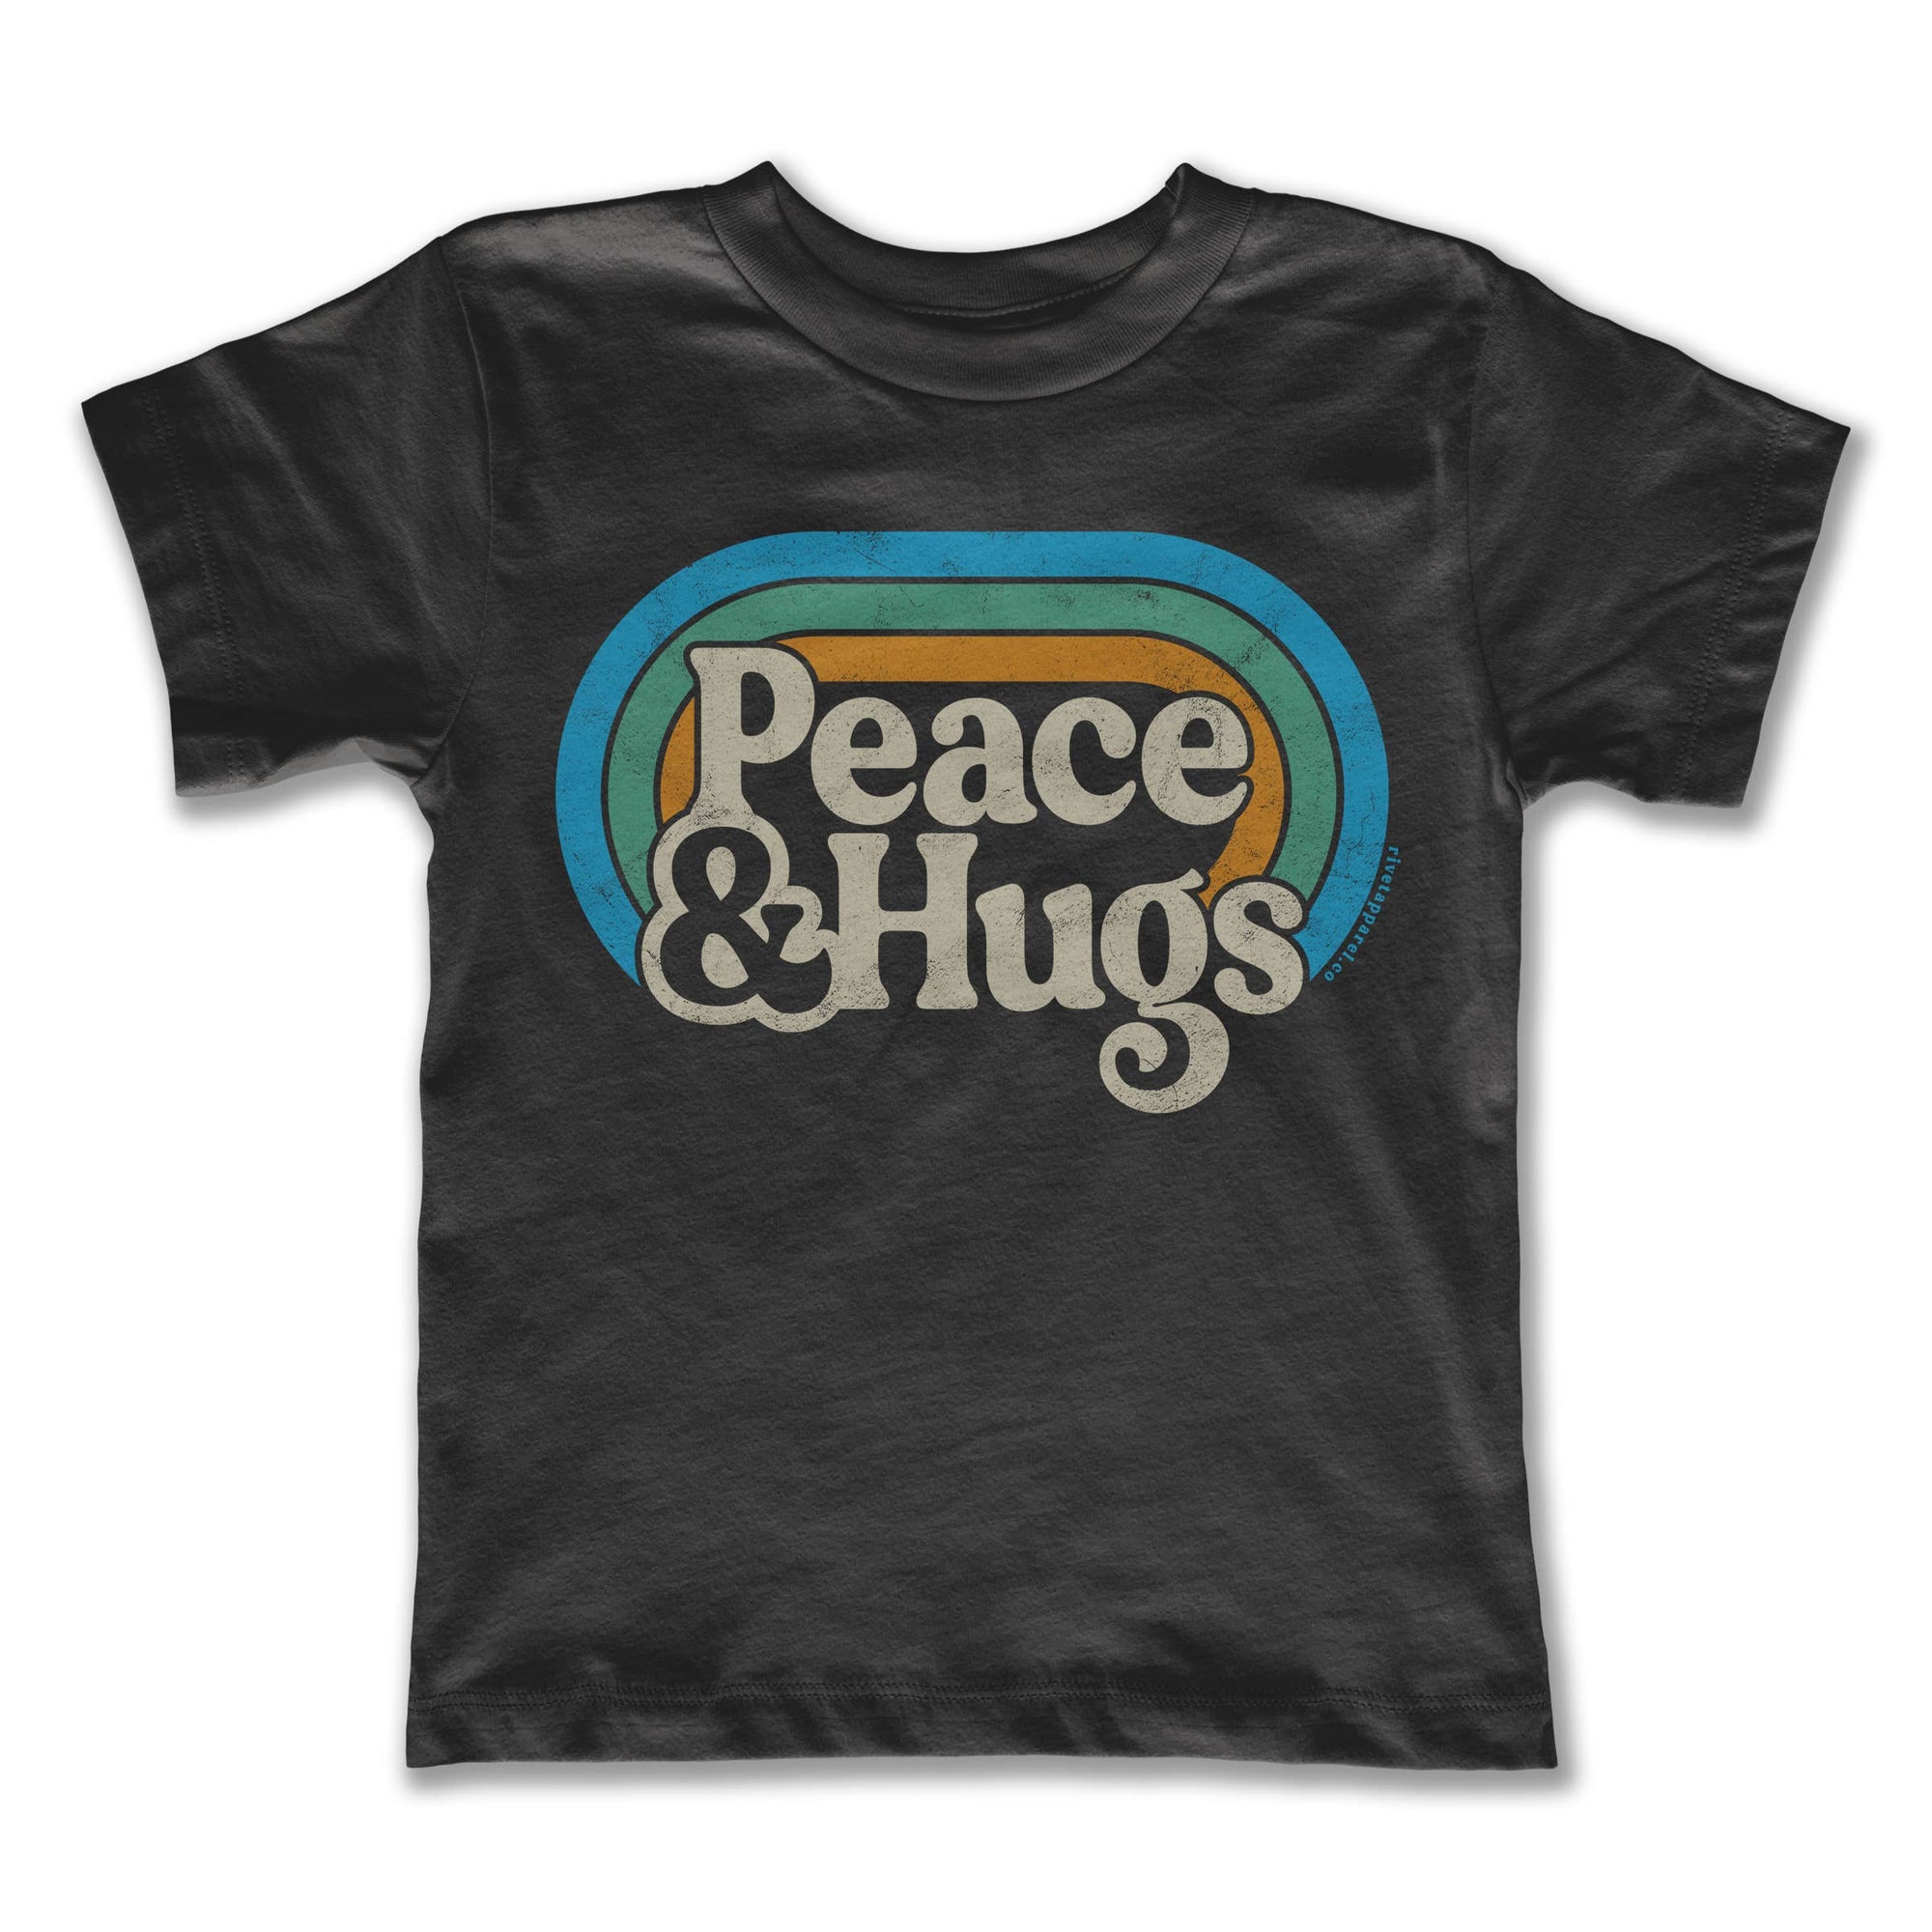 Rivet Apparel Co. - Peace & Hugs - All Things Dylan